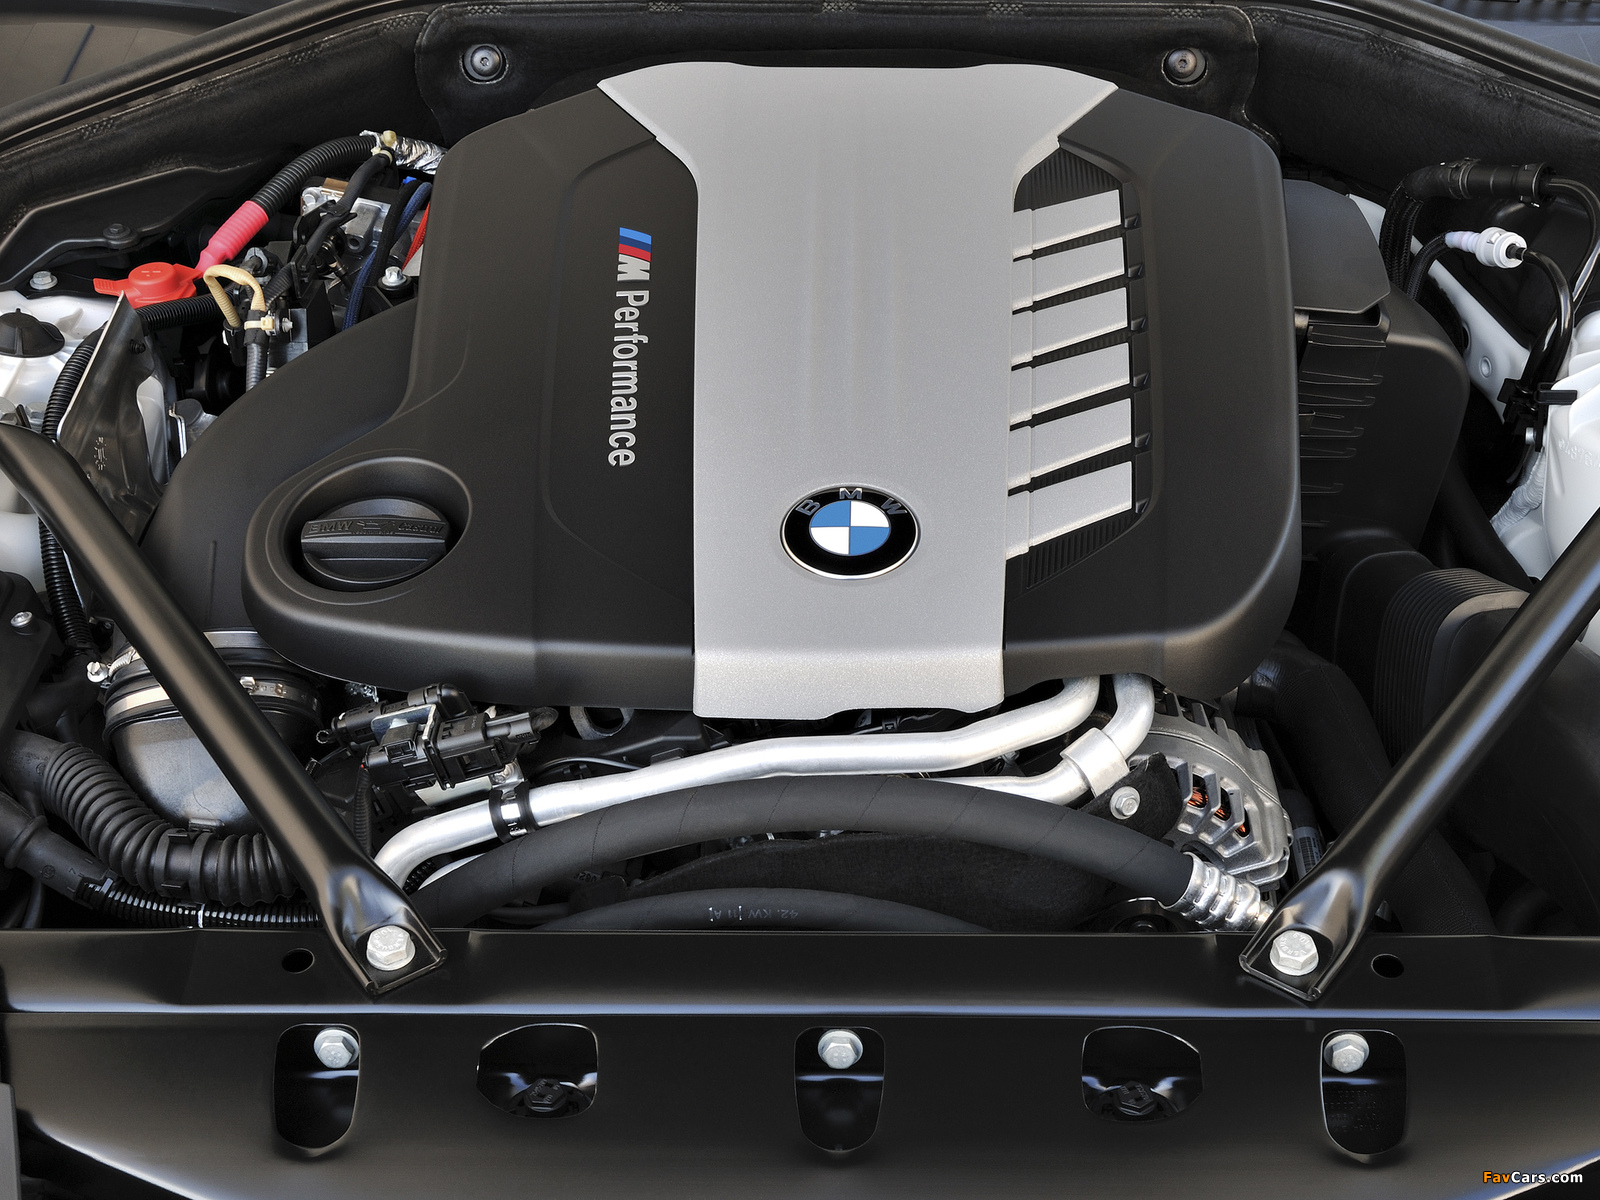 BMW 750d xDrive (F01) 2012 images (1600 x 1200)